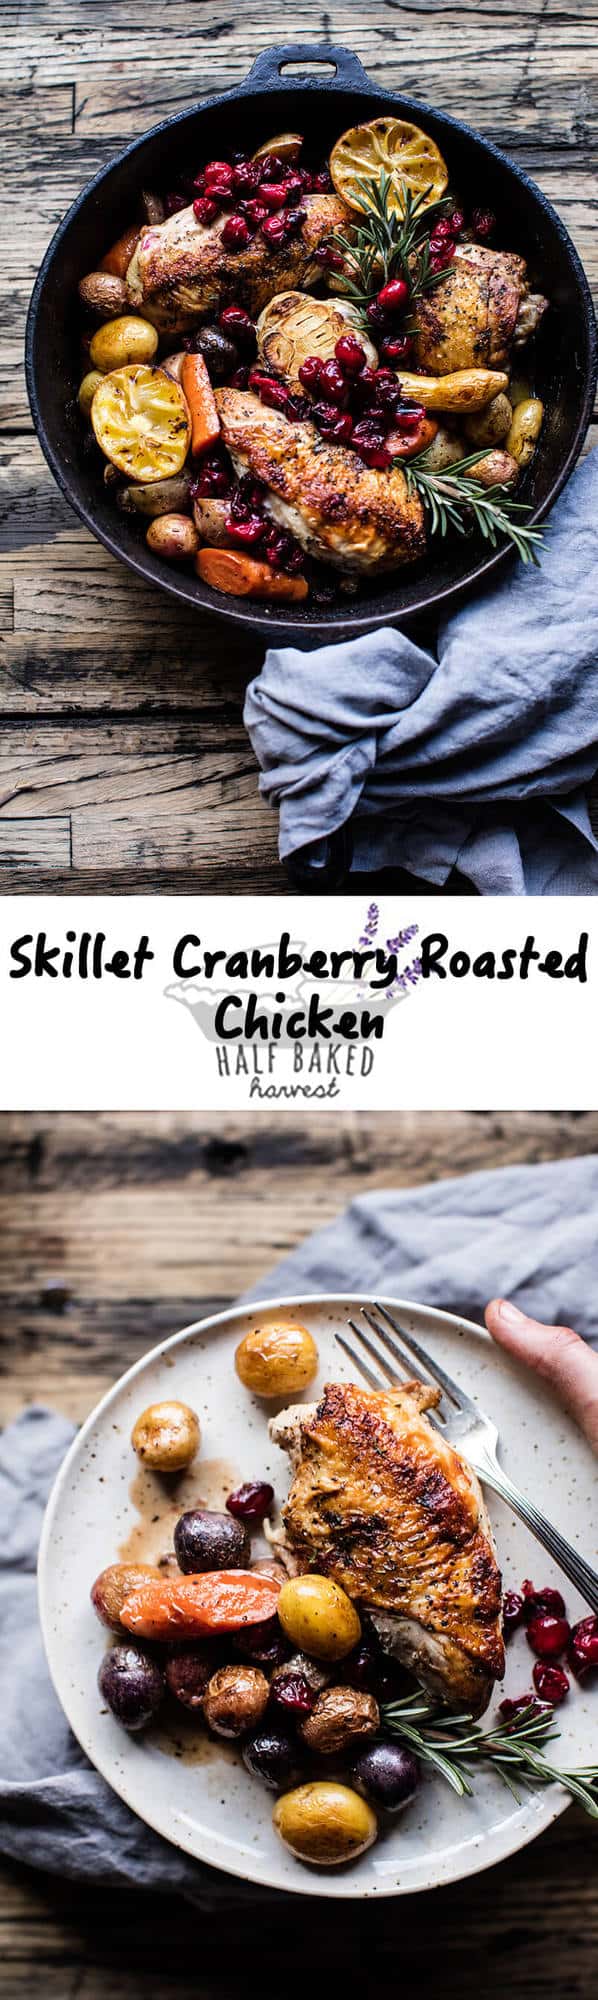 Skillet Cranberry Roasted Chicken and Potatoes | halfbakedharvest.com @hbharvest